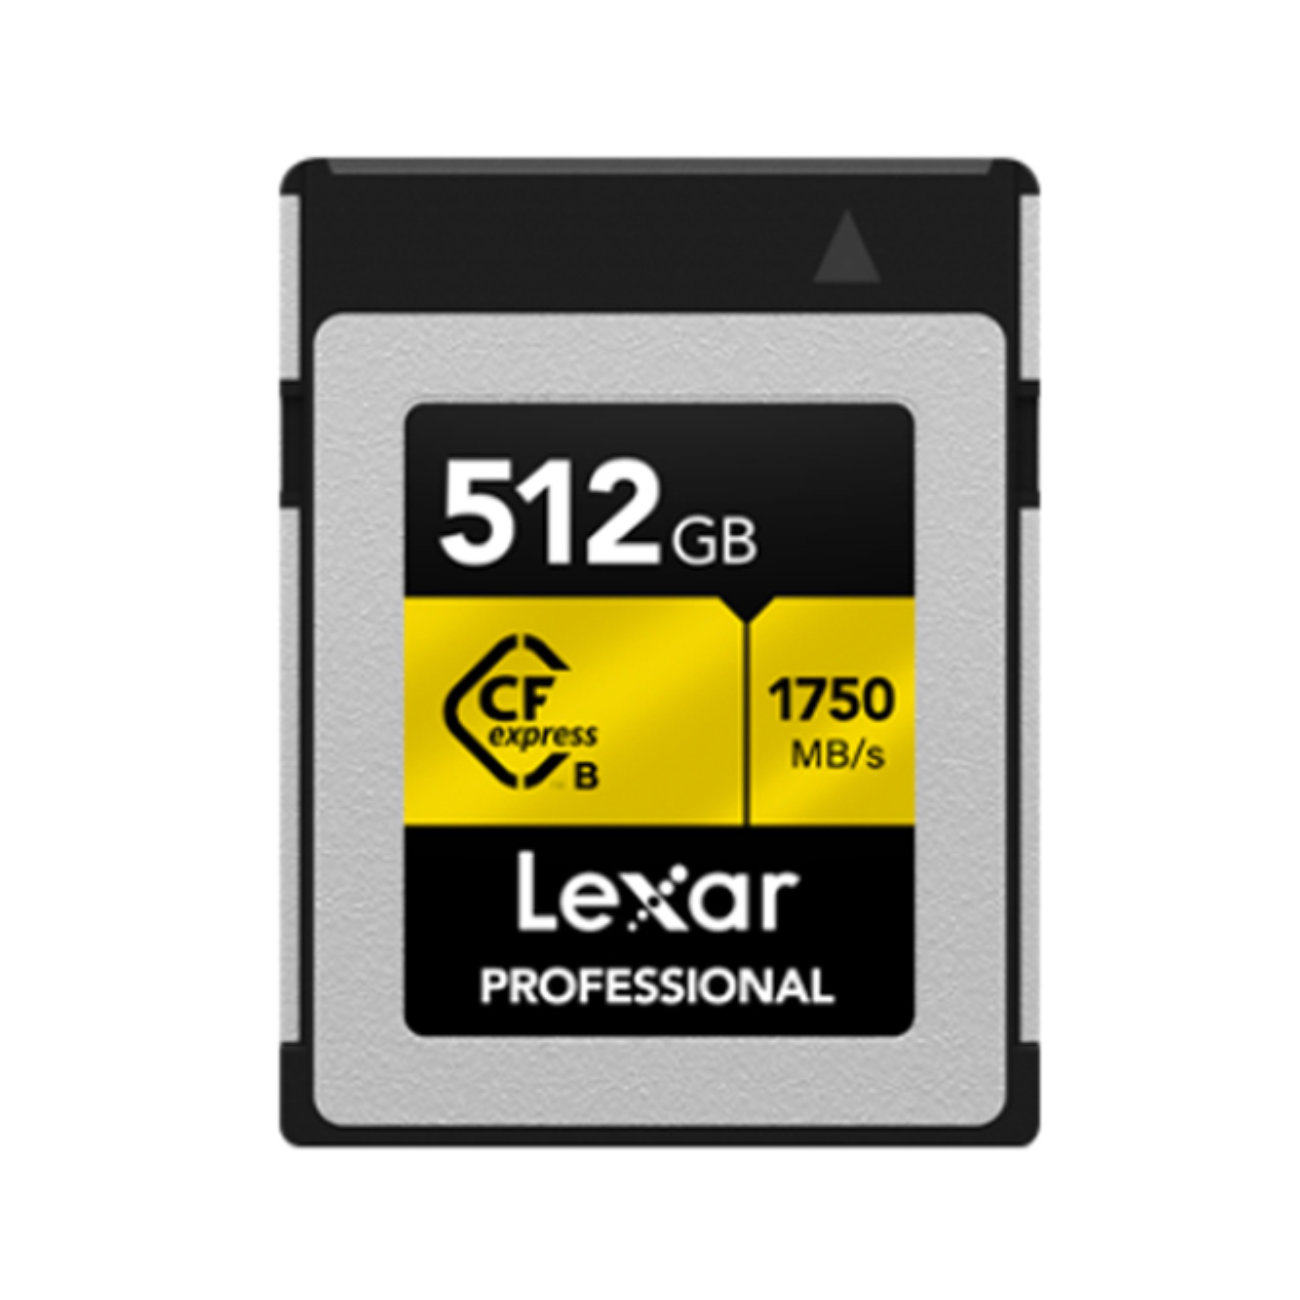 Lexar CFexpress 512 GB Professional Type B Gold